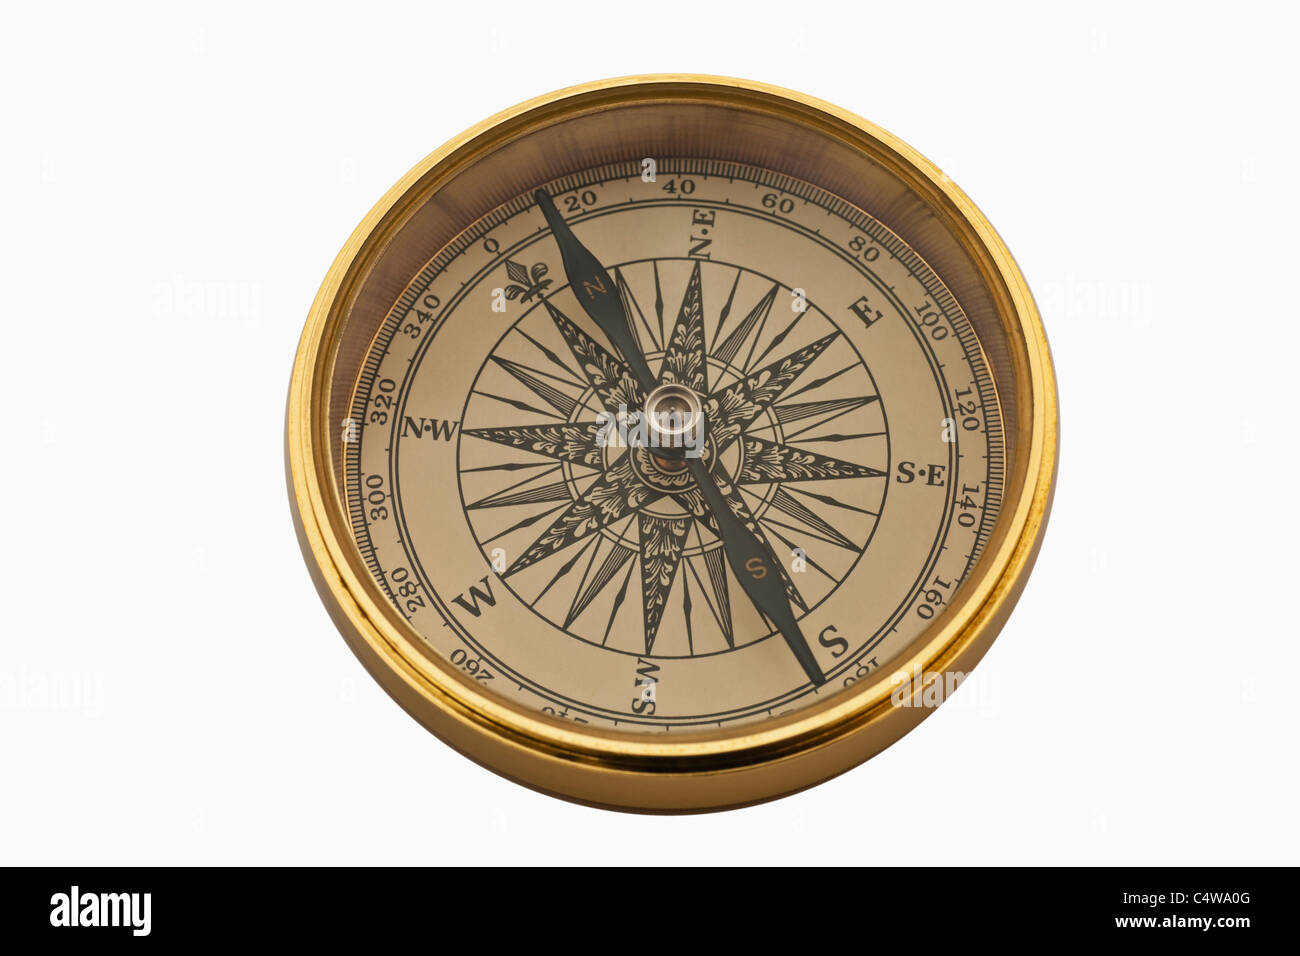 Detailansicht eines Kompasses | Detail photo of a compass Stock Photo